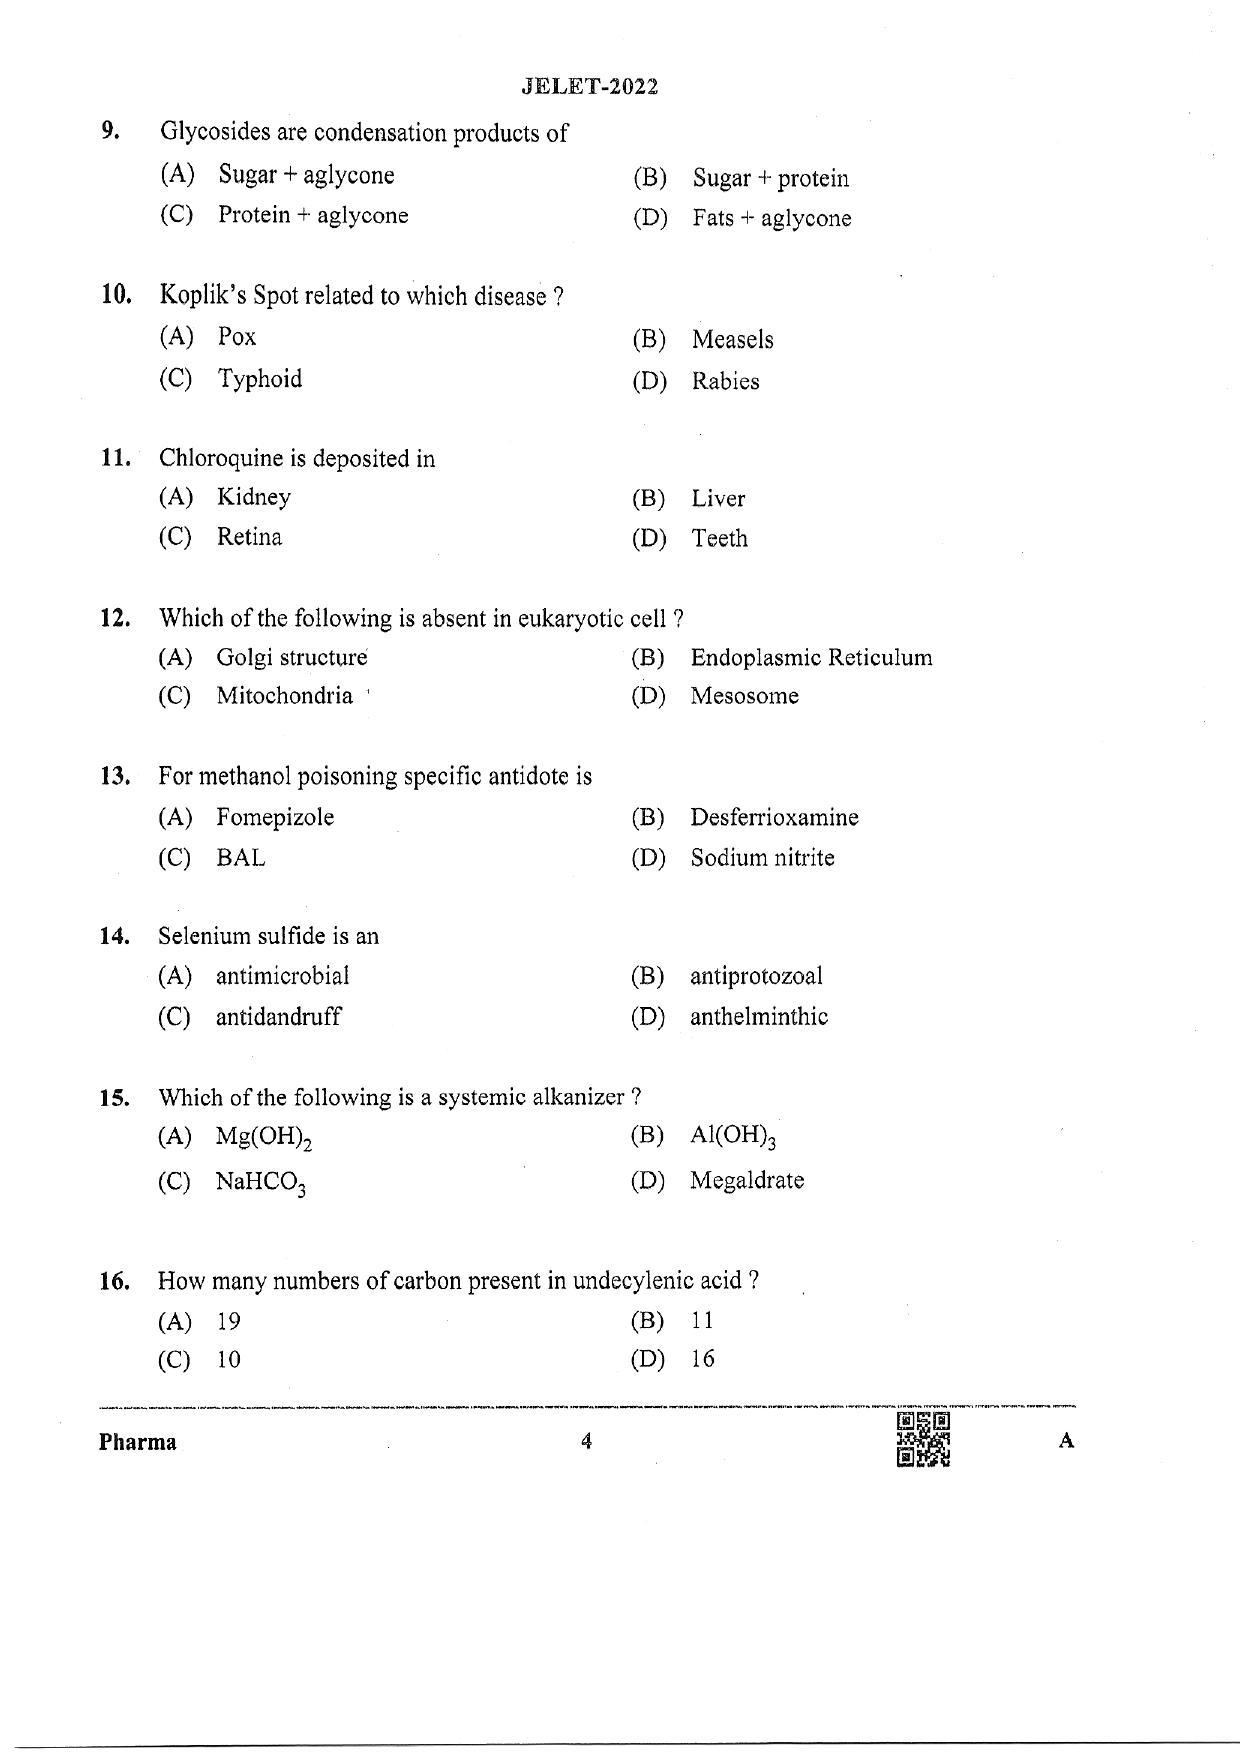 WBJEE  JELET 2022 Paper II ( Pharmacy) - Page 4